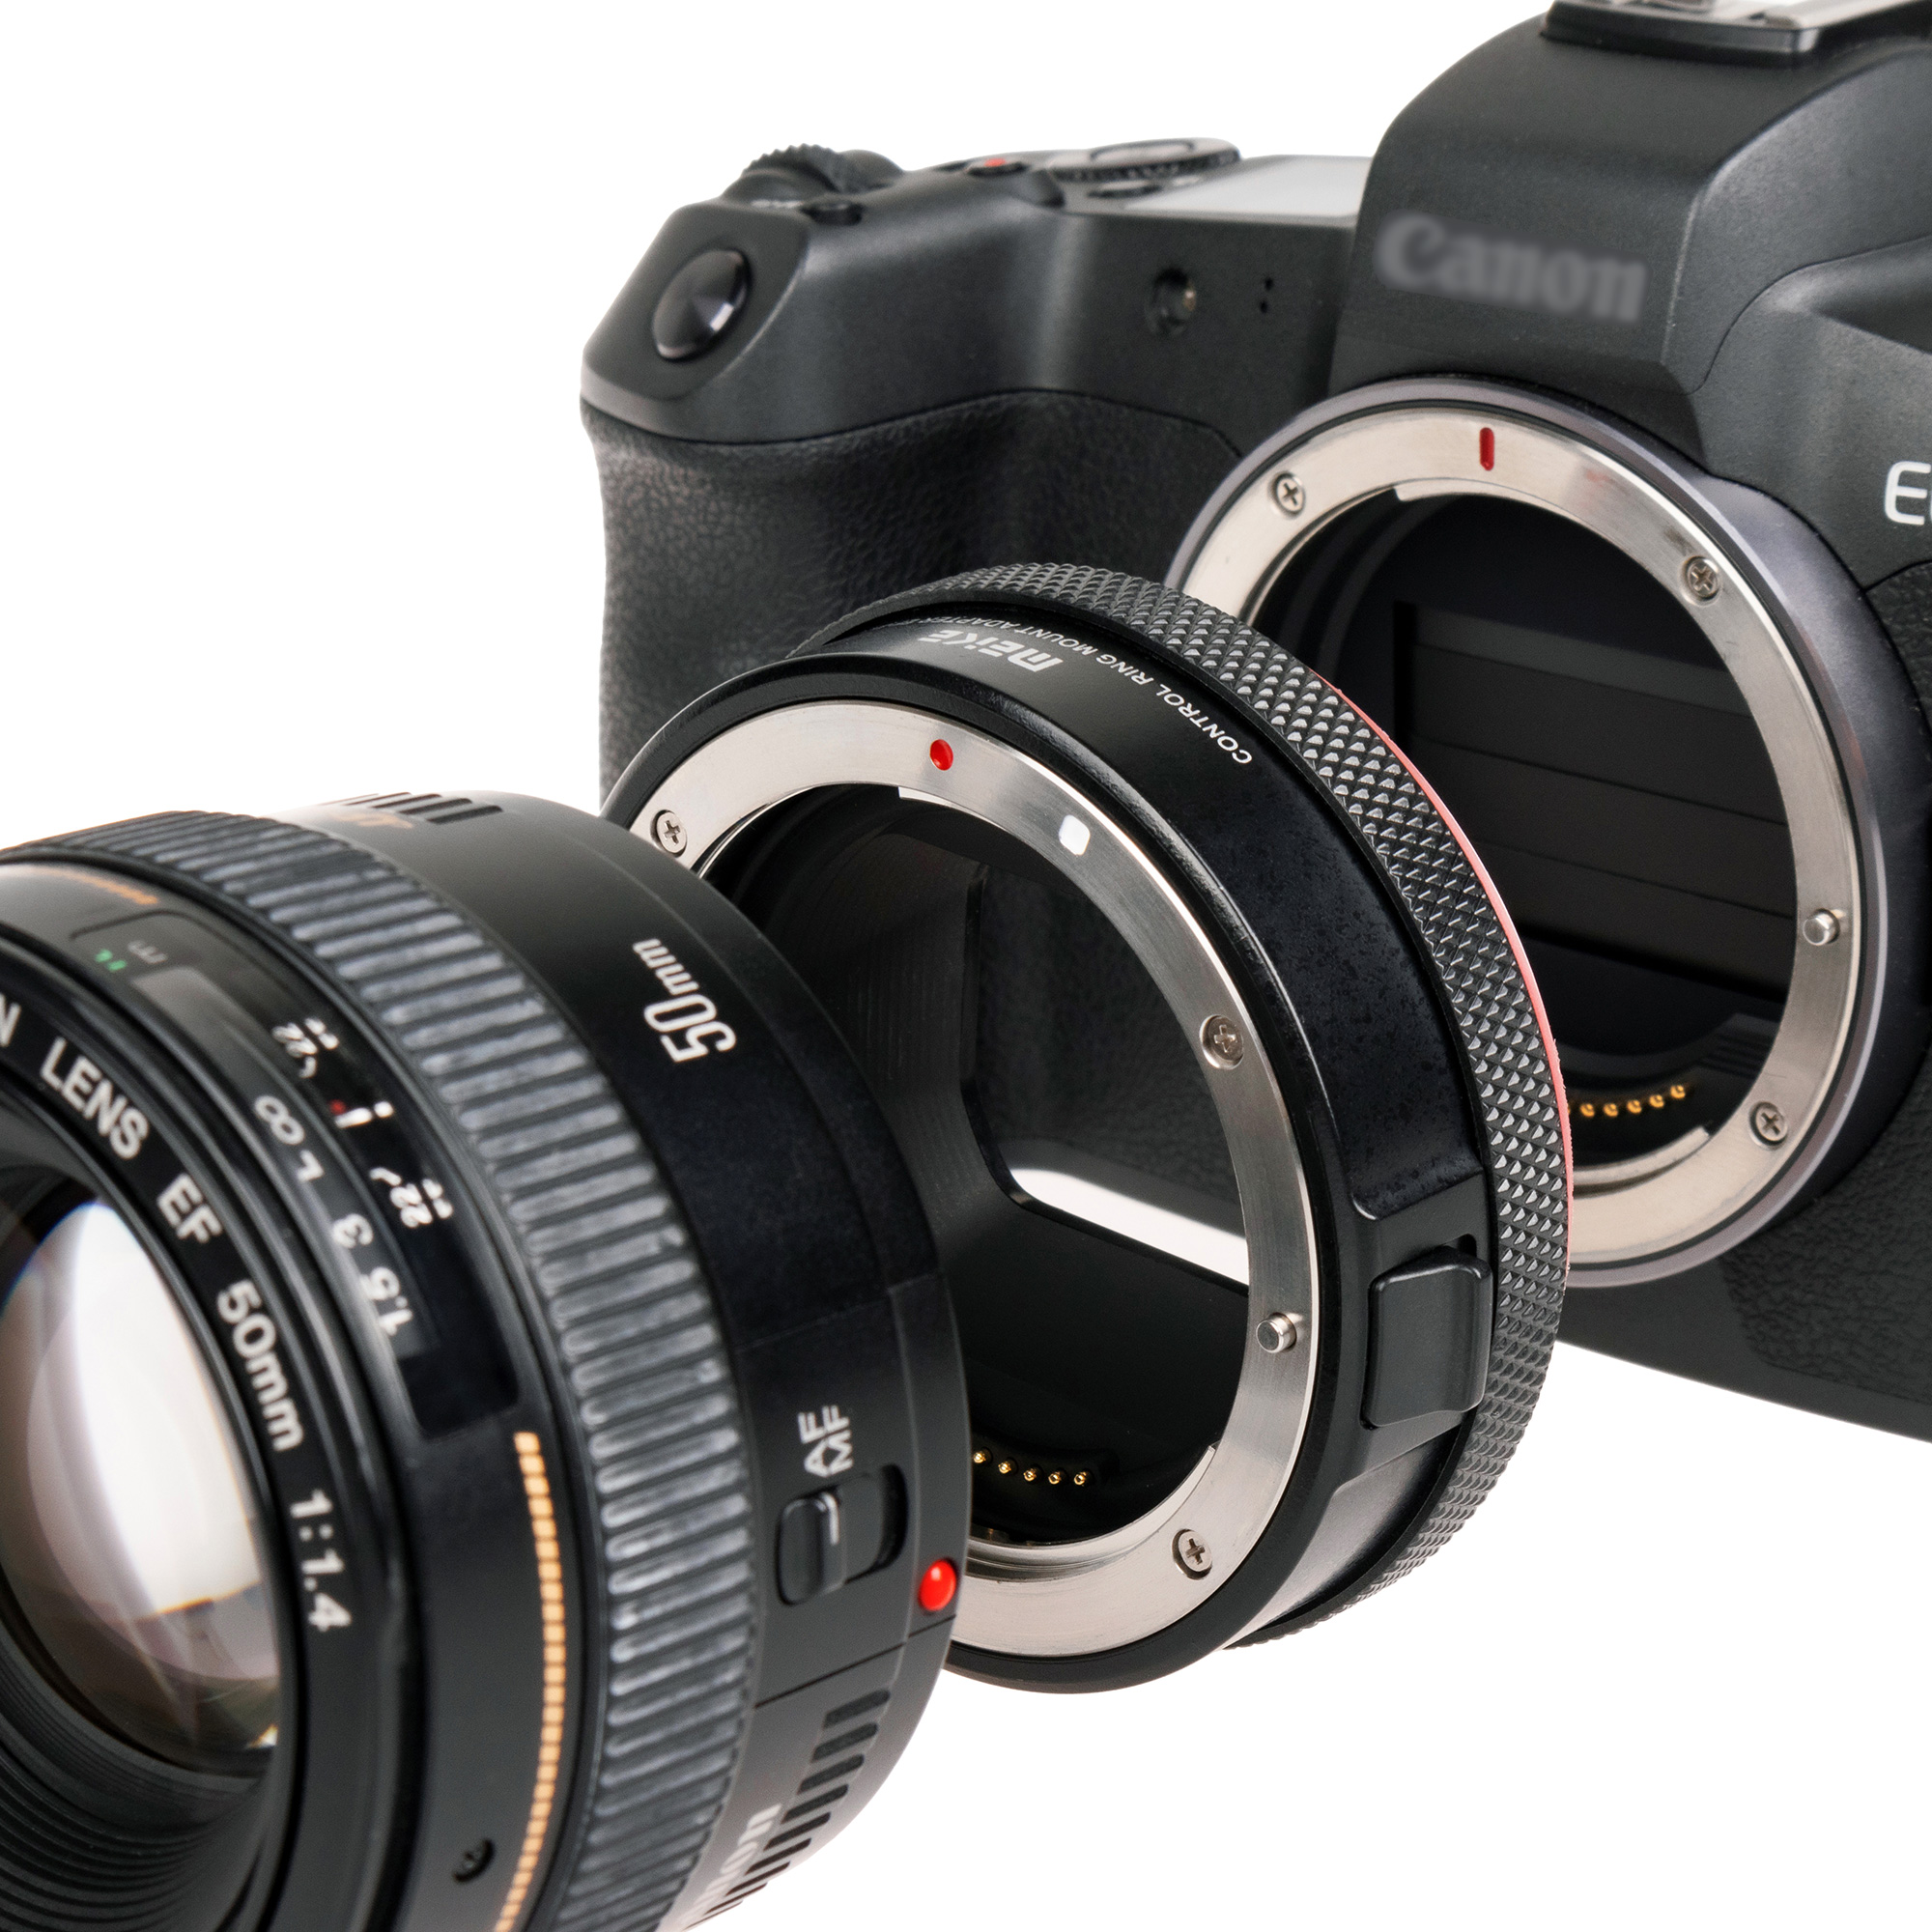 MK-EFTR-B AF Autofokus Control Ring Mount Adapter Canon EF/EF-S Objektive an Canon EOS R Kamera